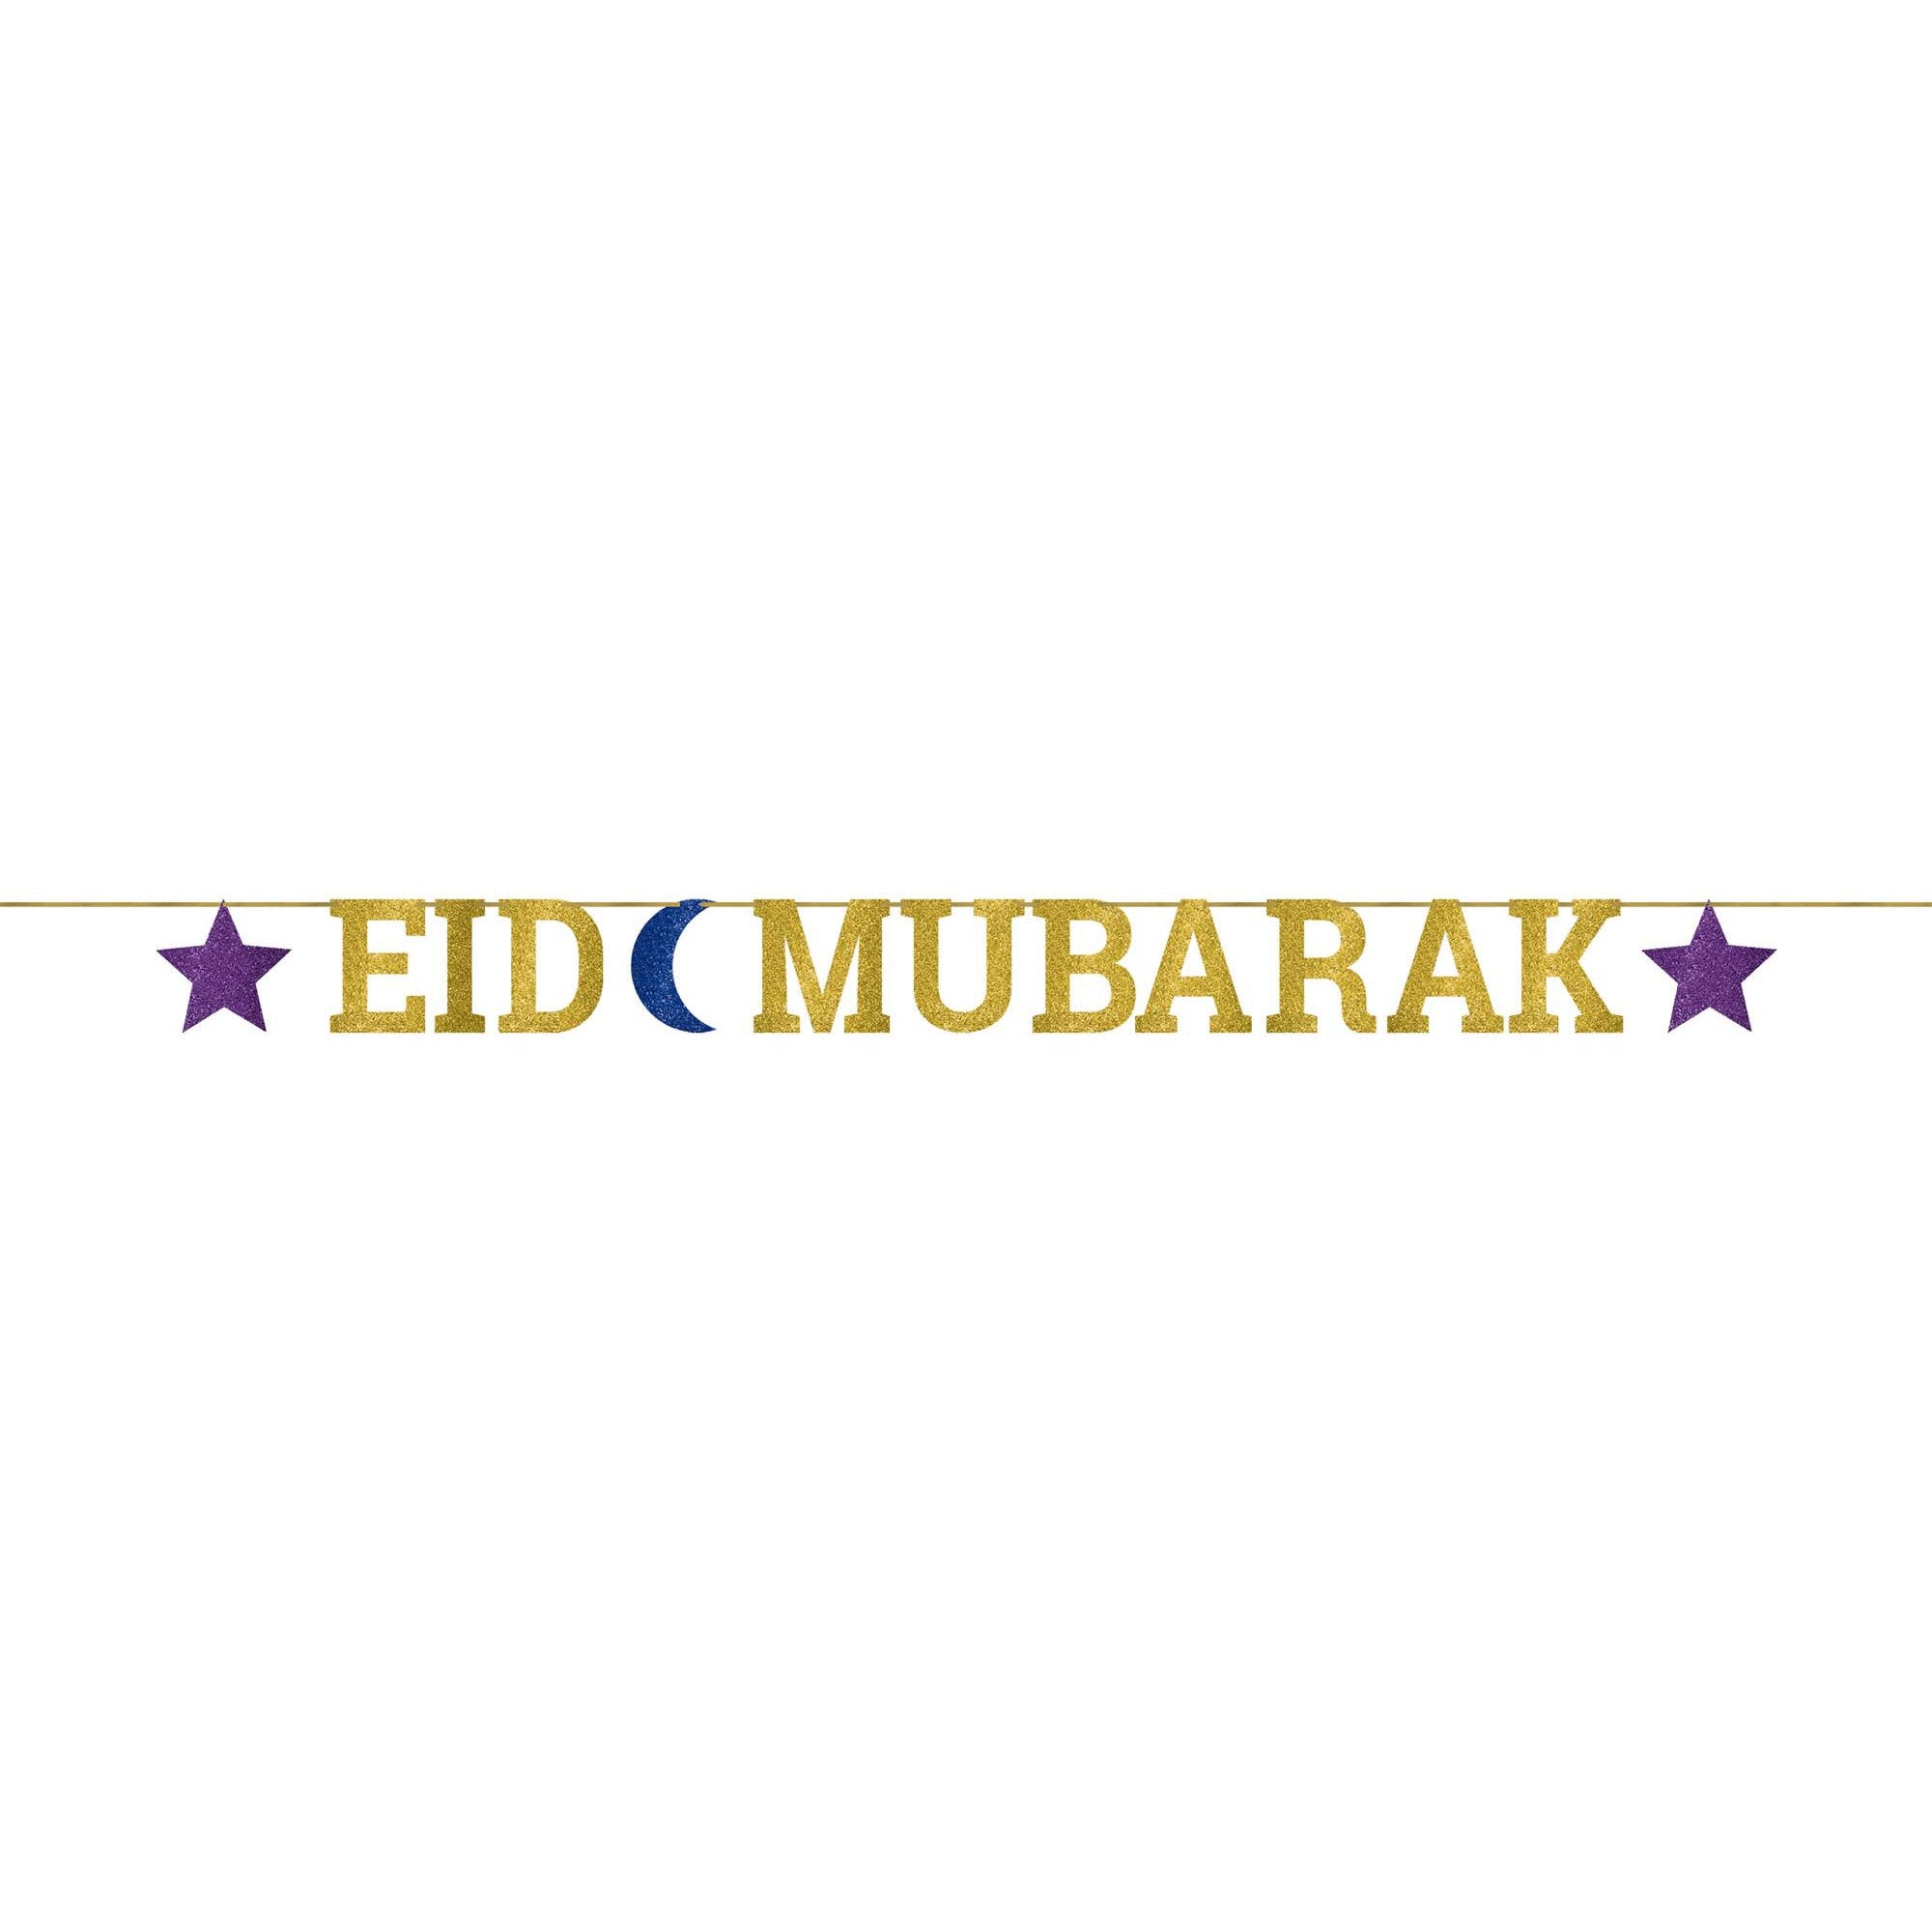 Eid Mubarak Letter Banner 12ft x 5in - Party Centre